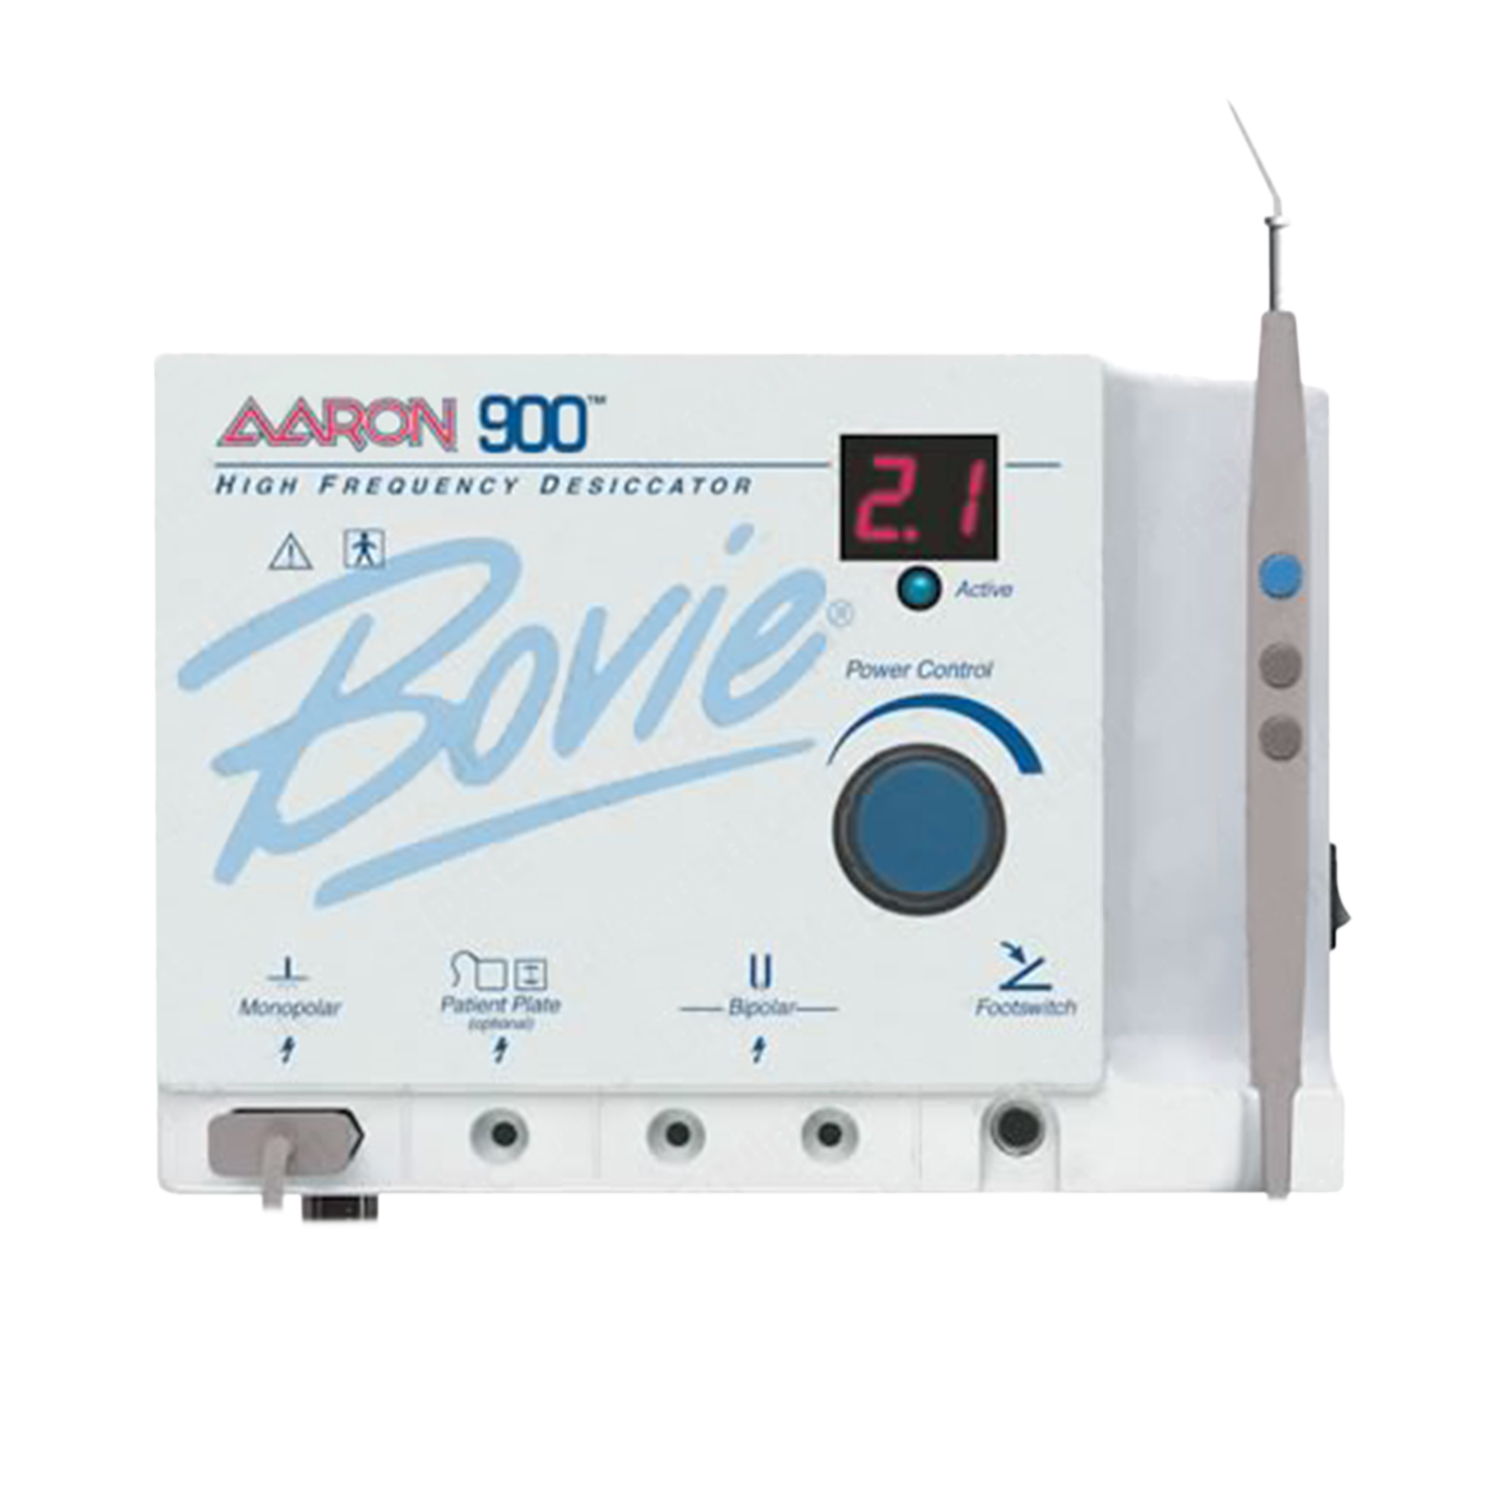 Medical Equipment | Aaron Bovie 900 - Avante Health Solutions